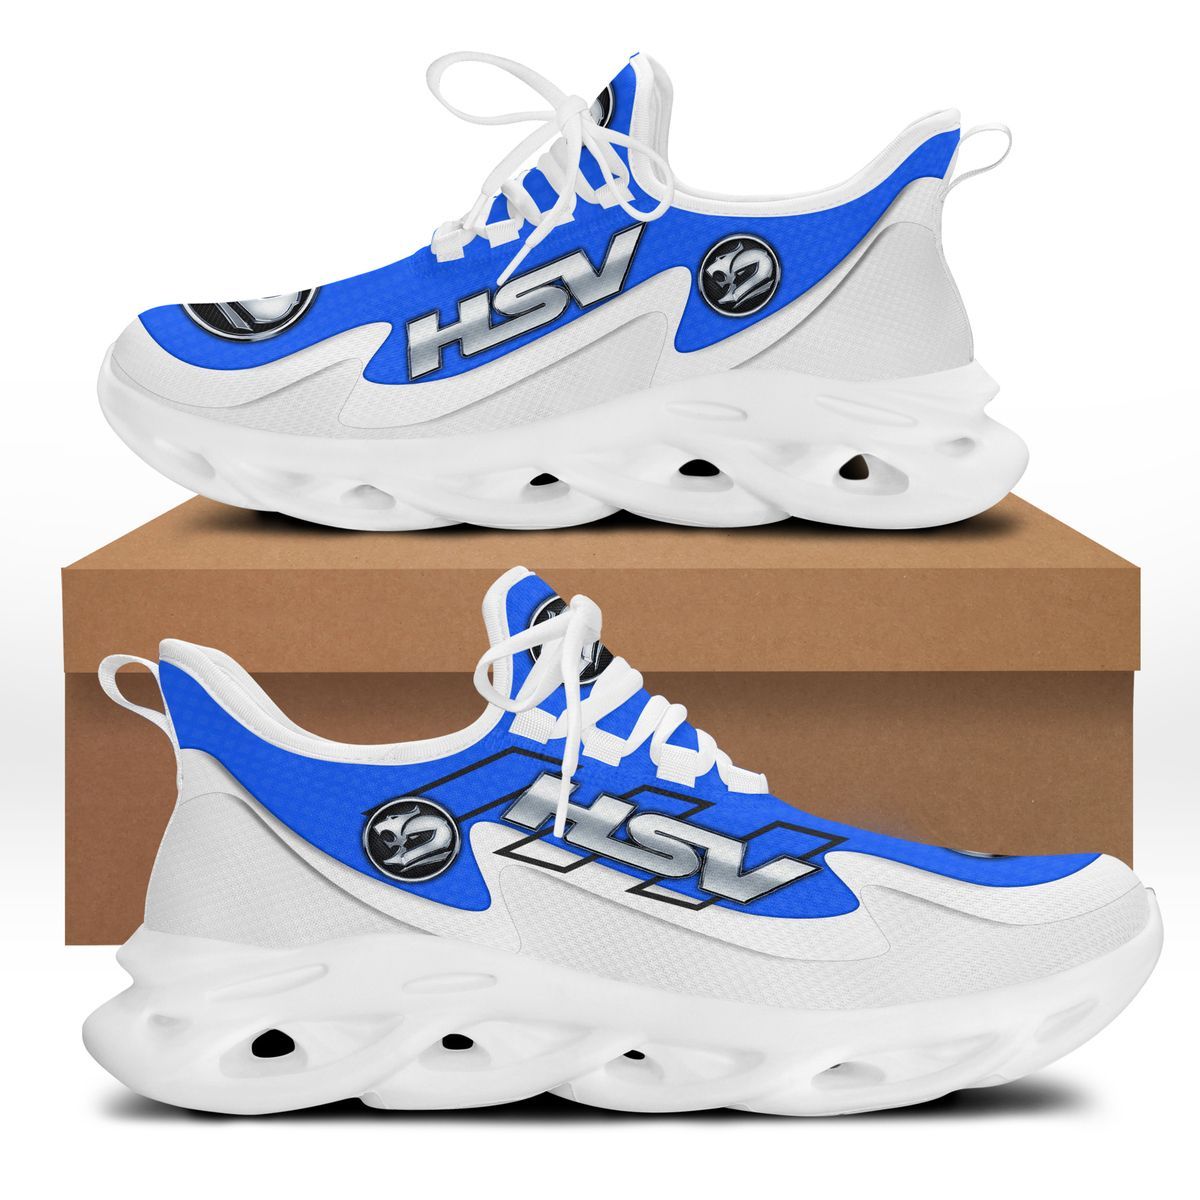 Hsv Dvt-Ht Bs Running Shoes Ver 1 (Blue) – Fashionspicex Shop